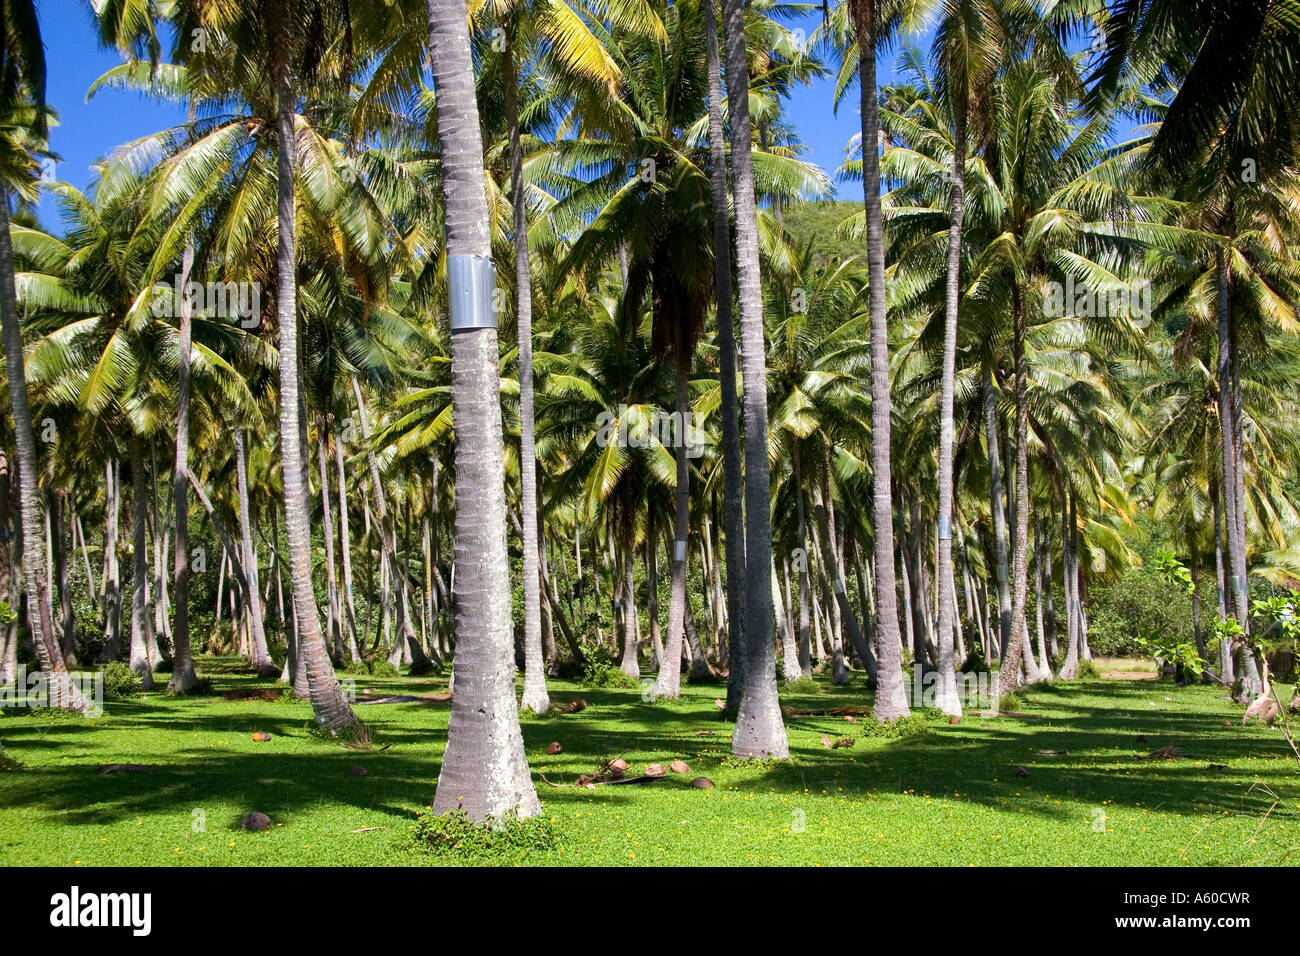 A coconut palm tree grove on the island of Moorea Stock Photo